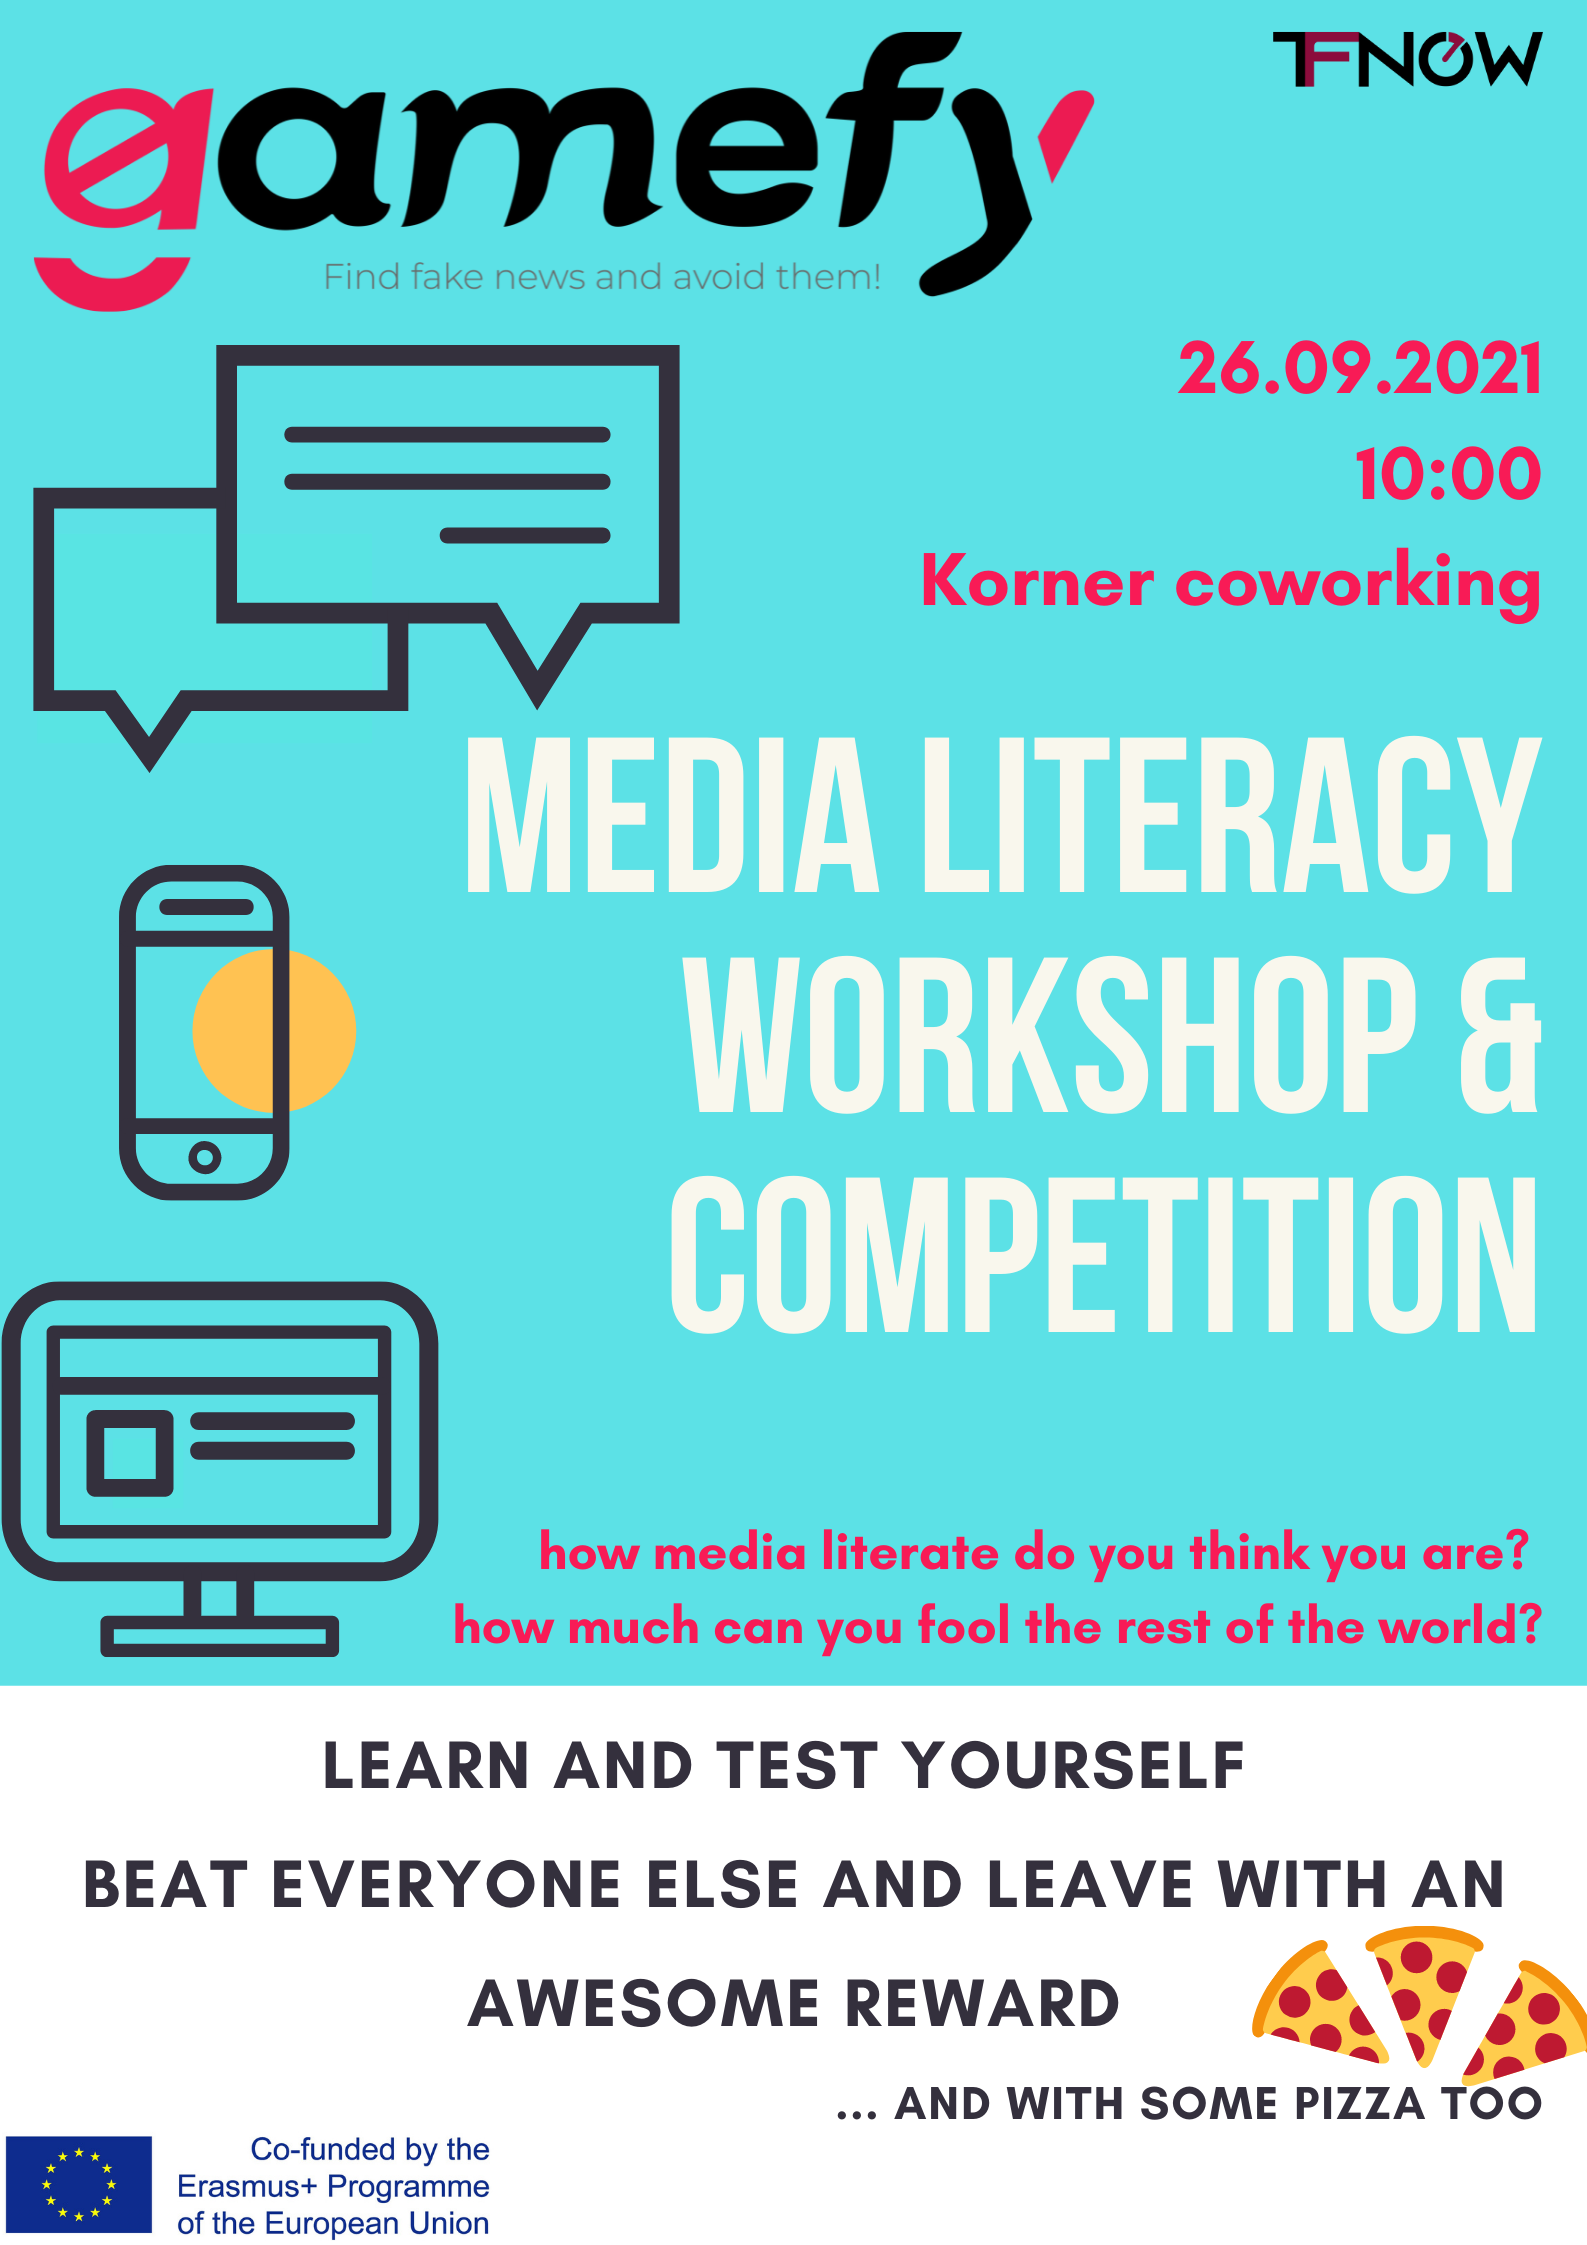 gaMEfy Media literacy Workshop & Competition